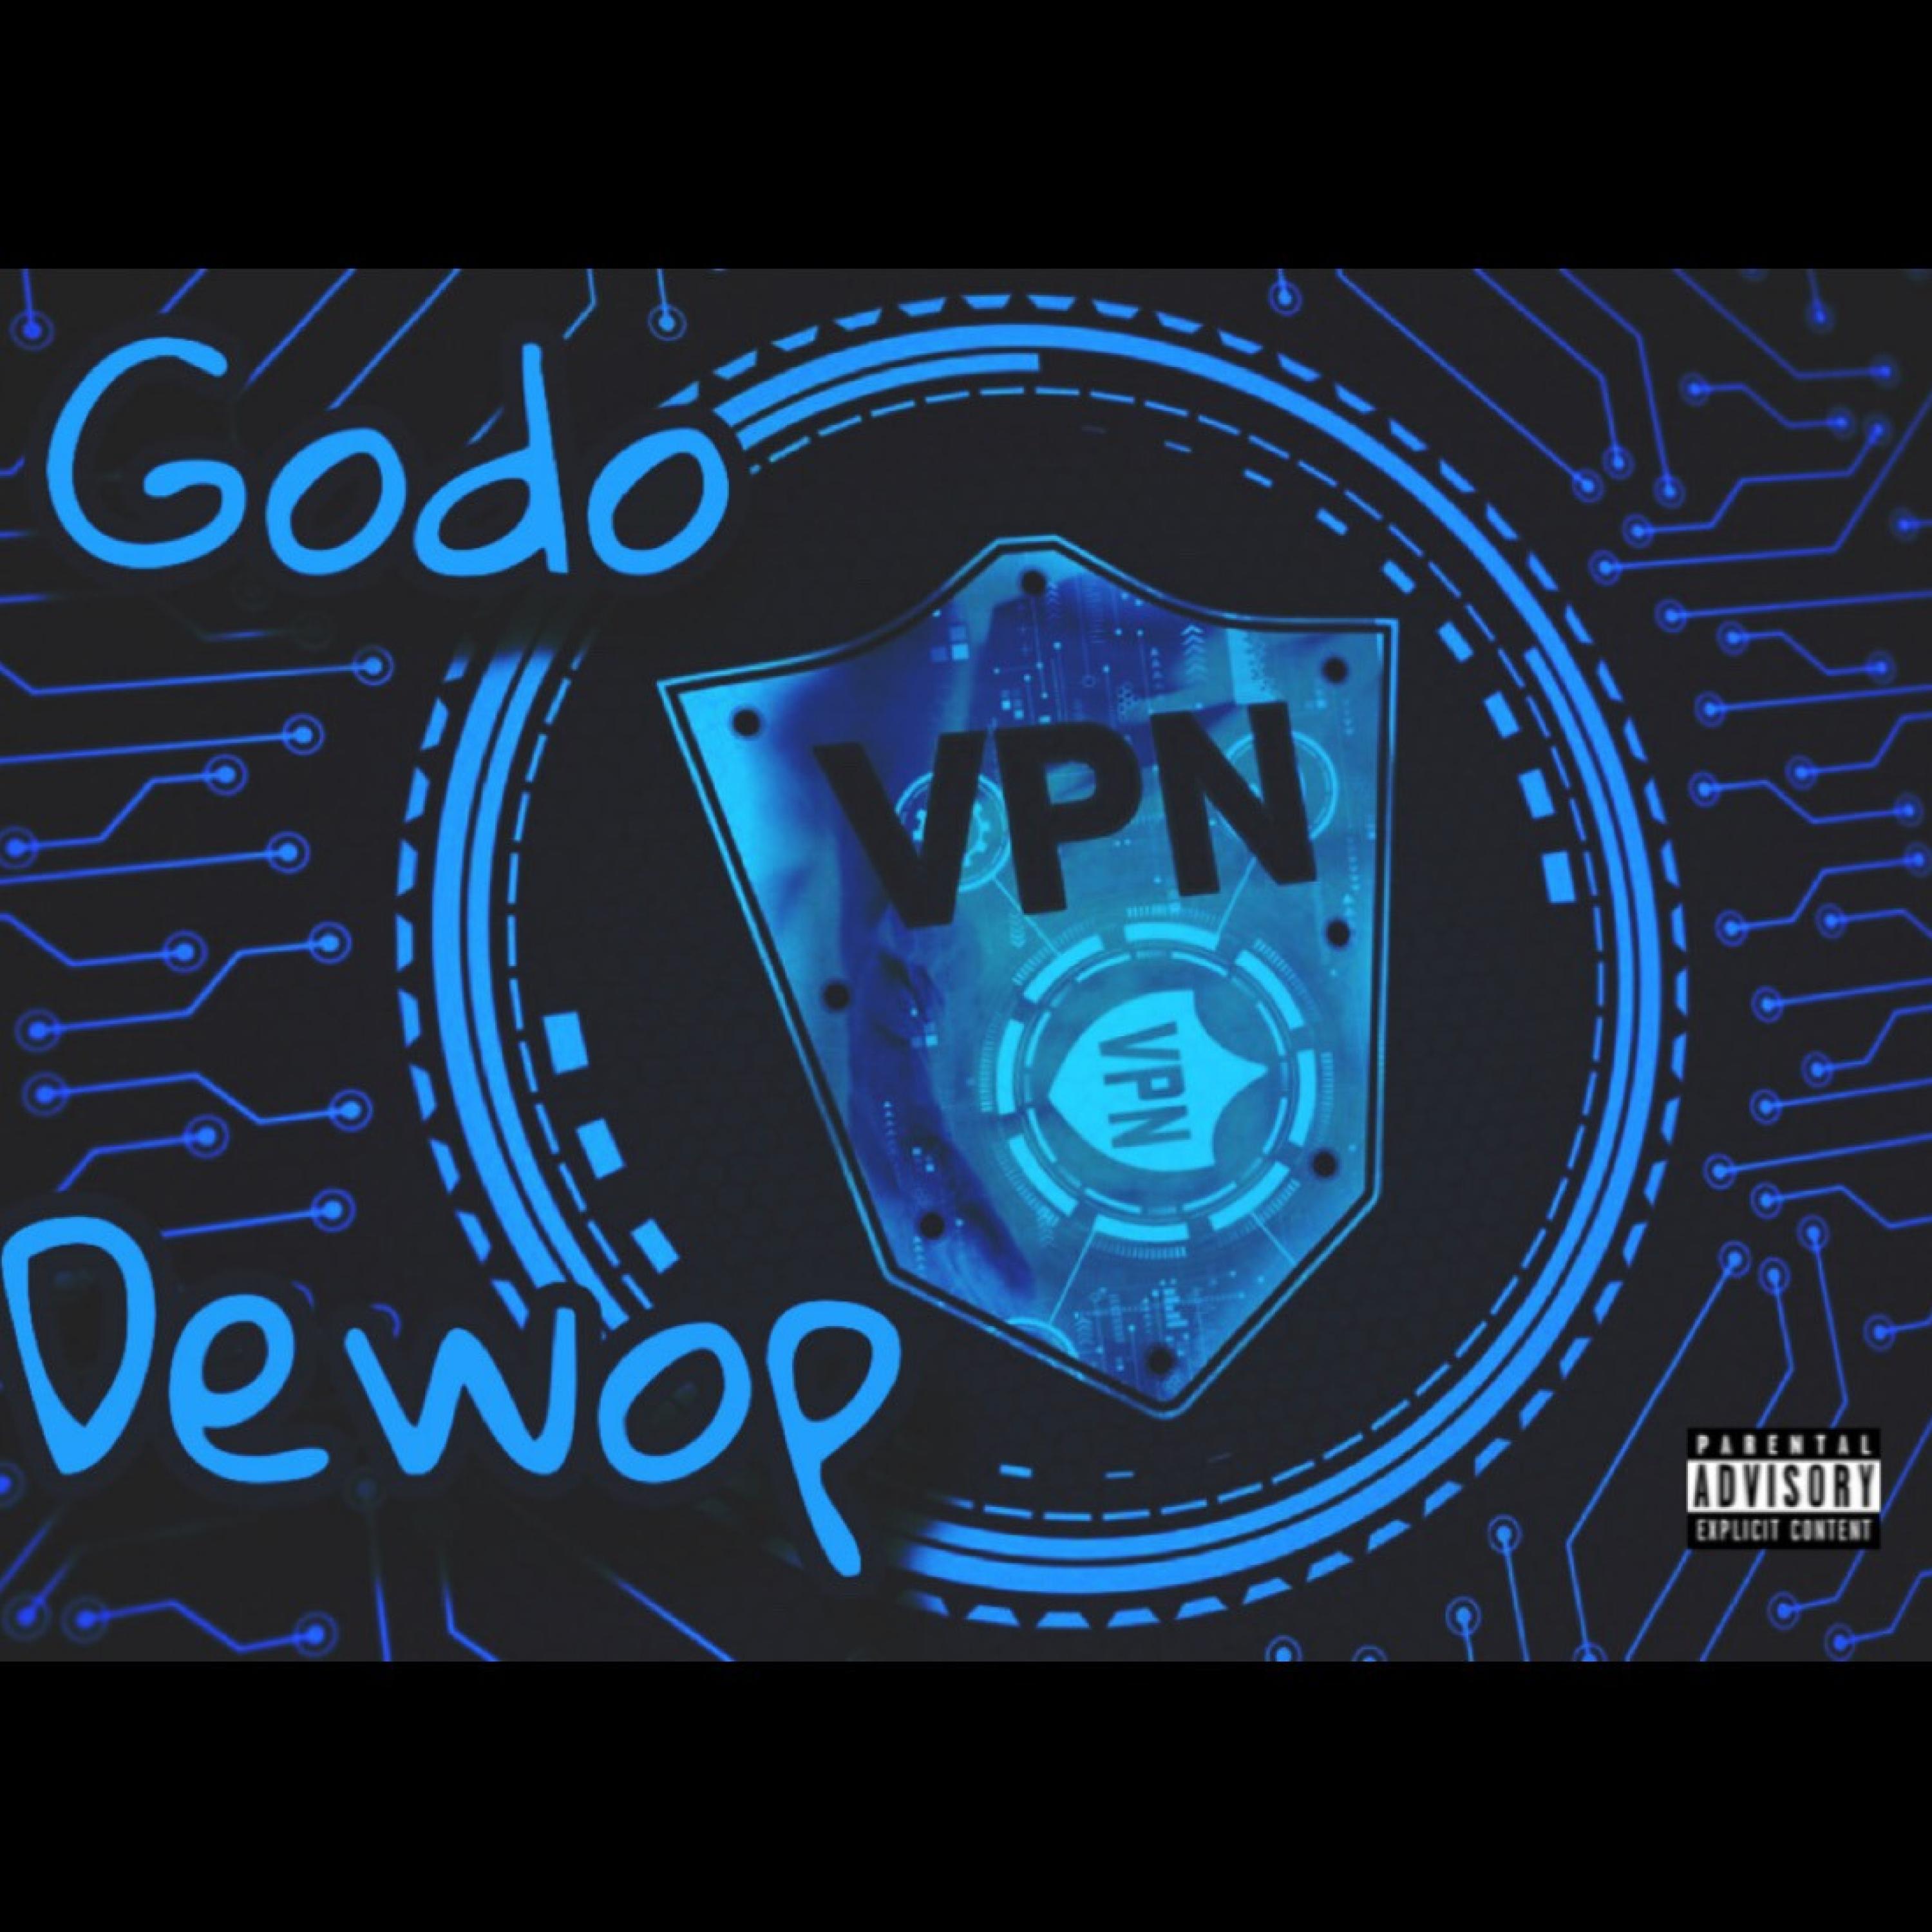 goDO - VPN (feat. Dewop)